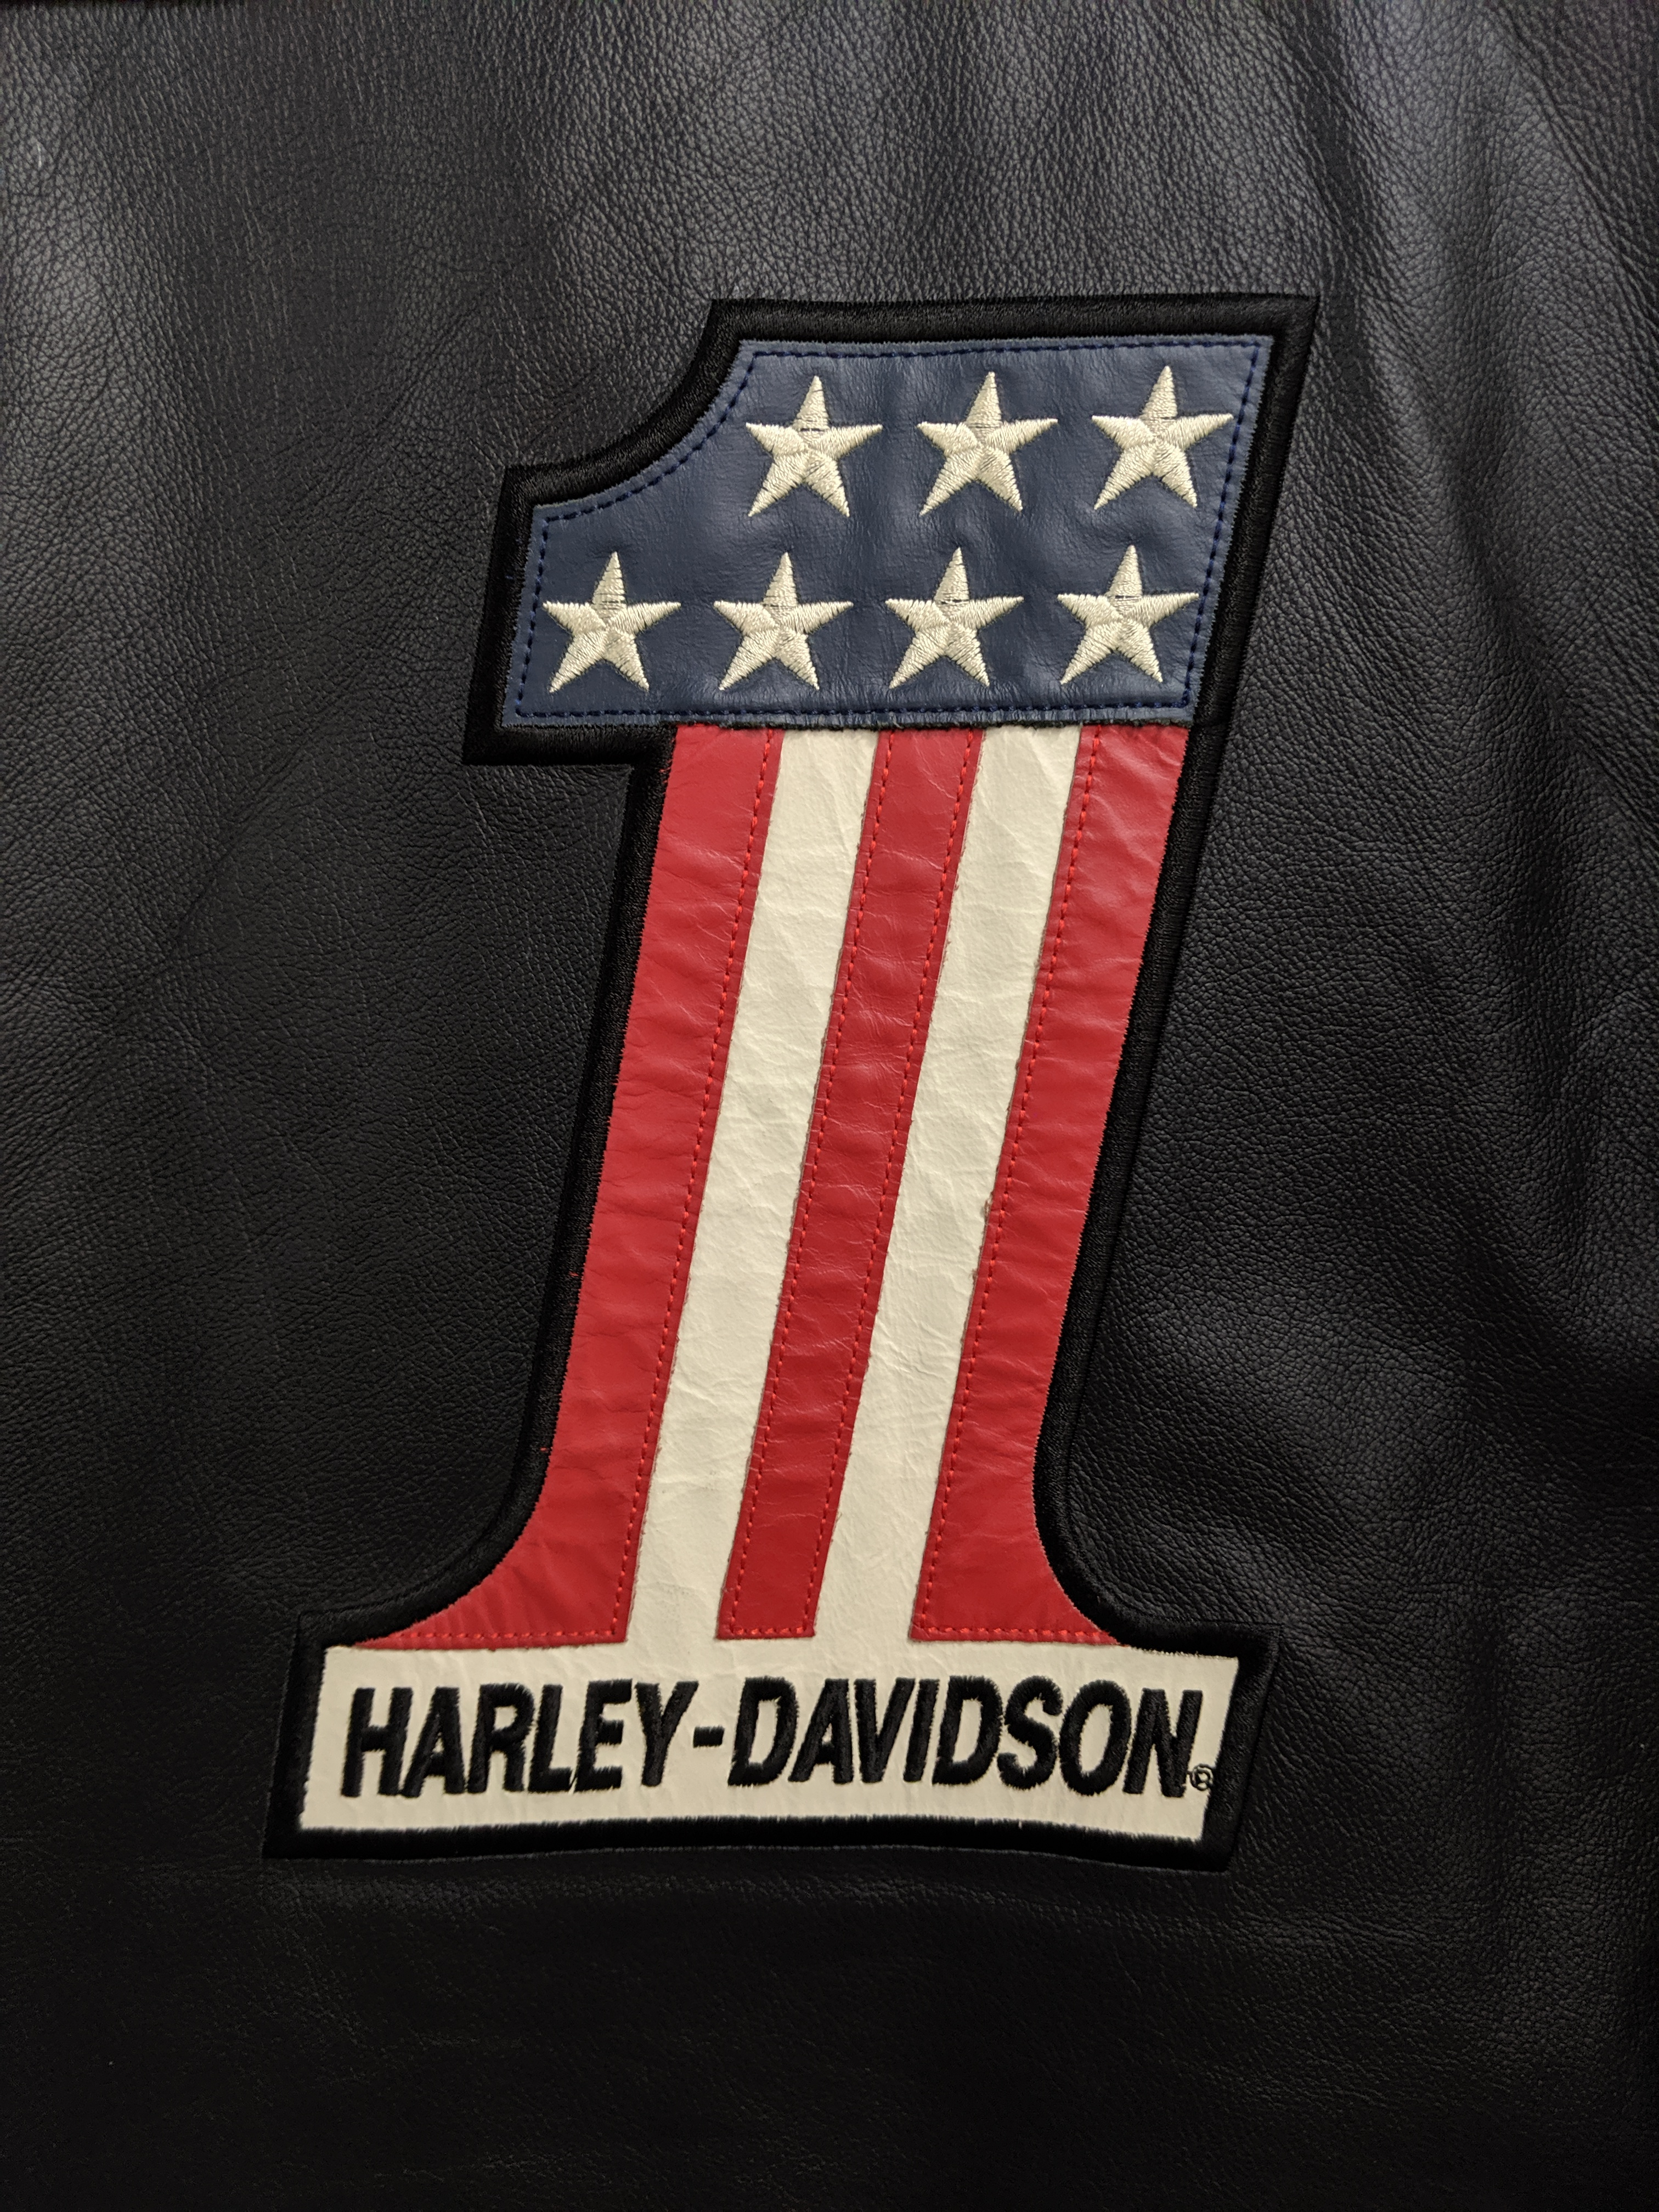 [L] Vintage Harley Davidson Leather Vest with Patches